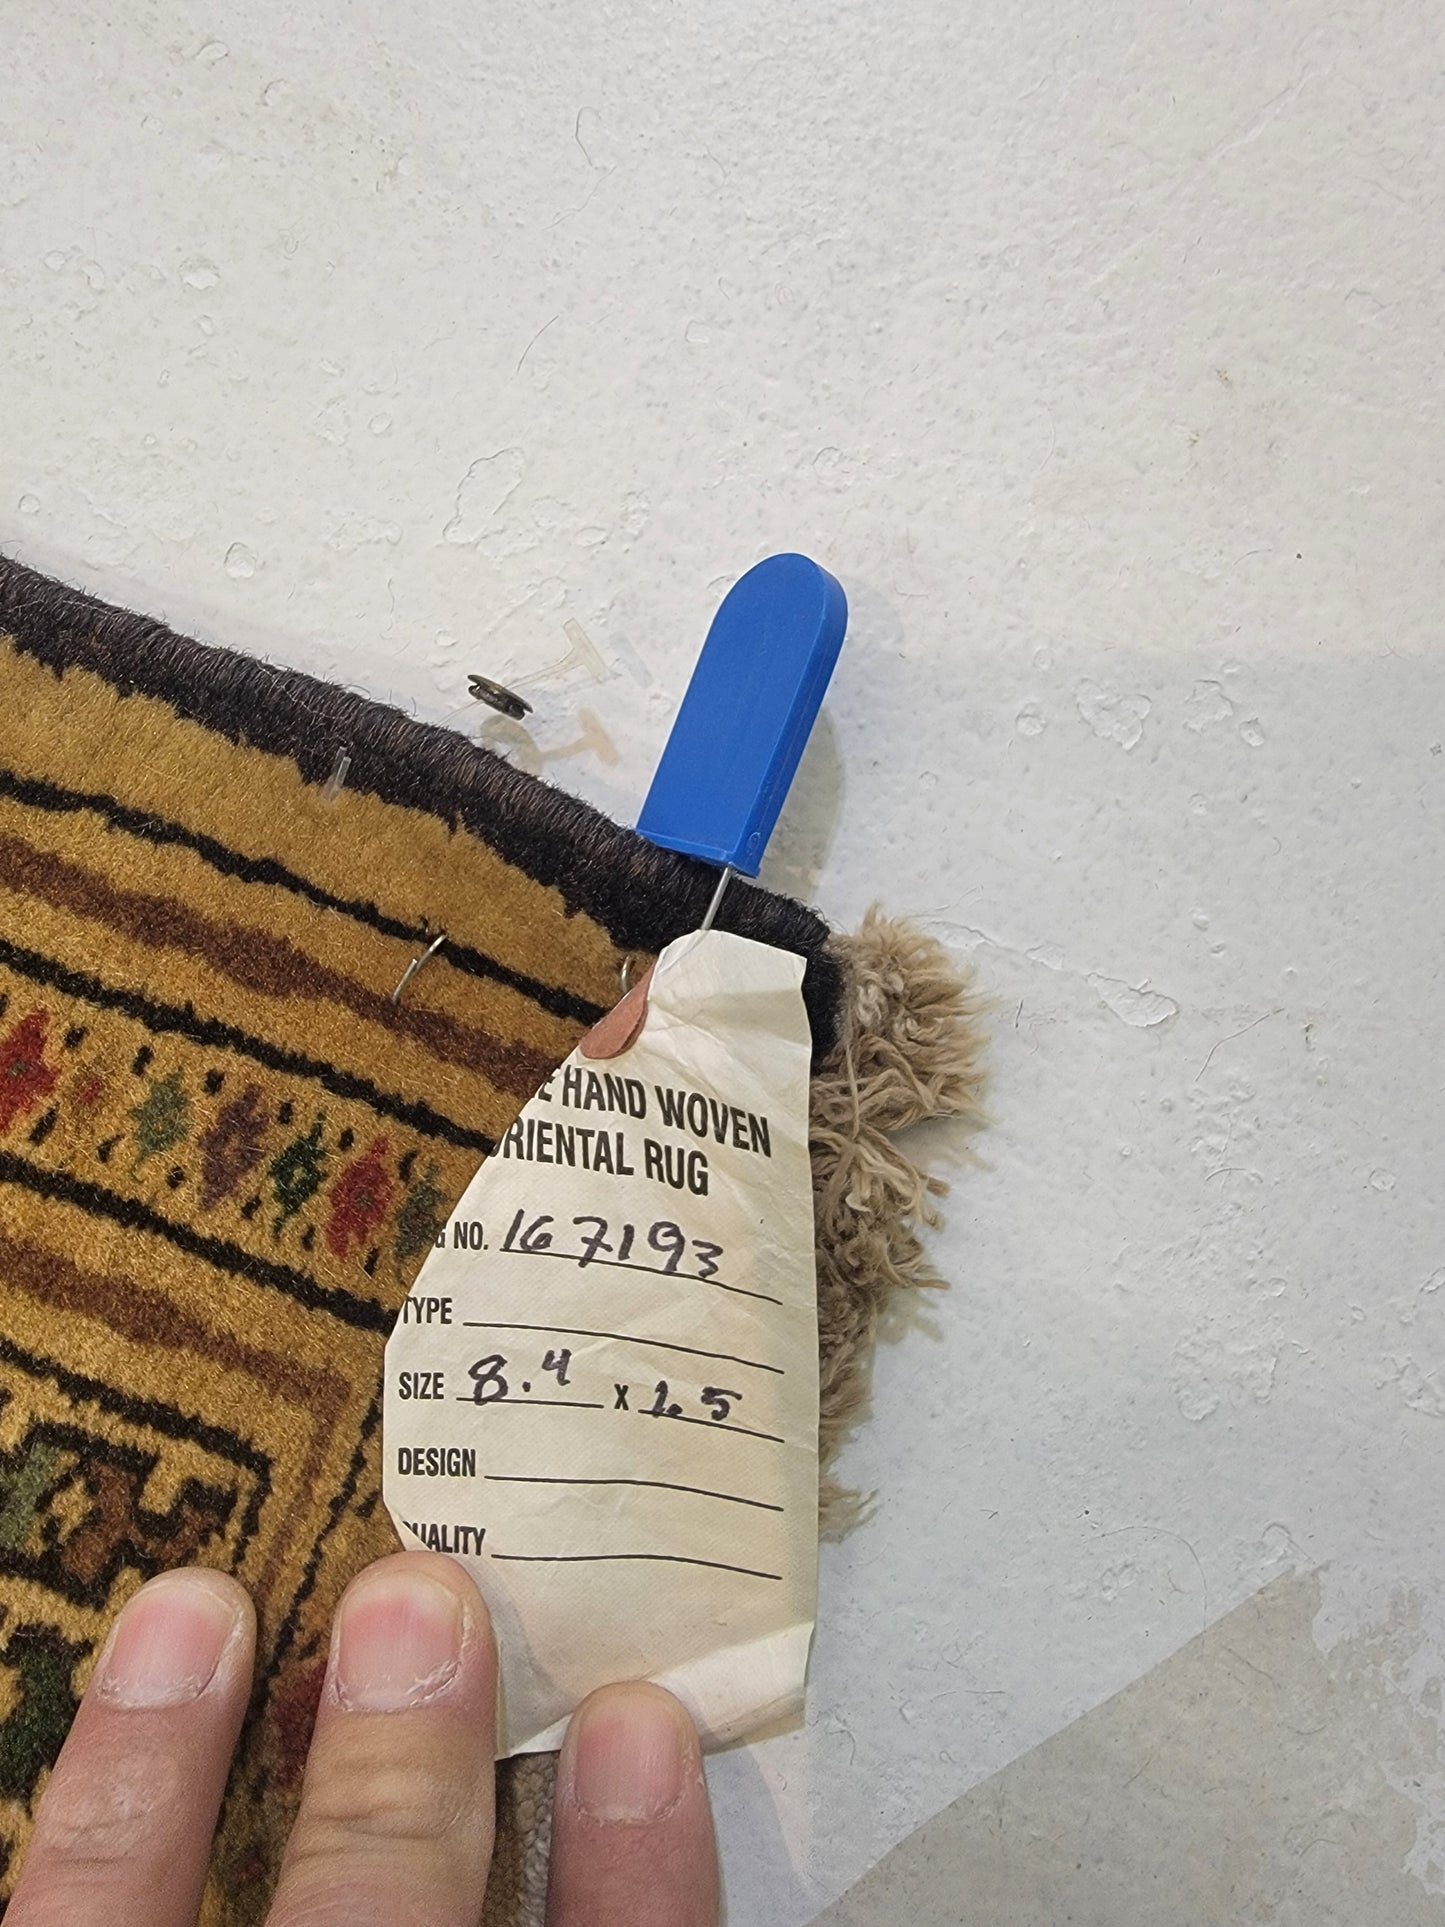 Hand-Knotted Wool Runner Turkmen 1'5" x 8'4"